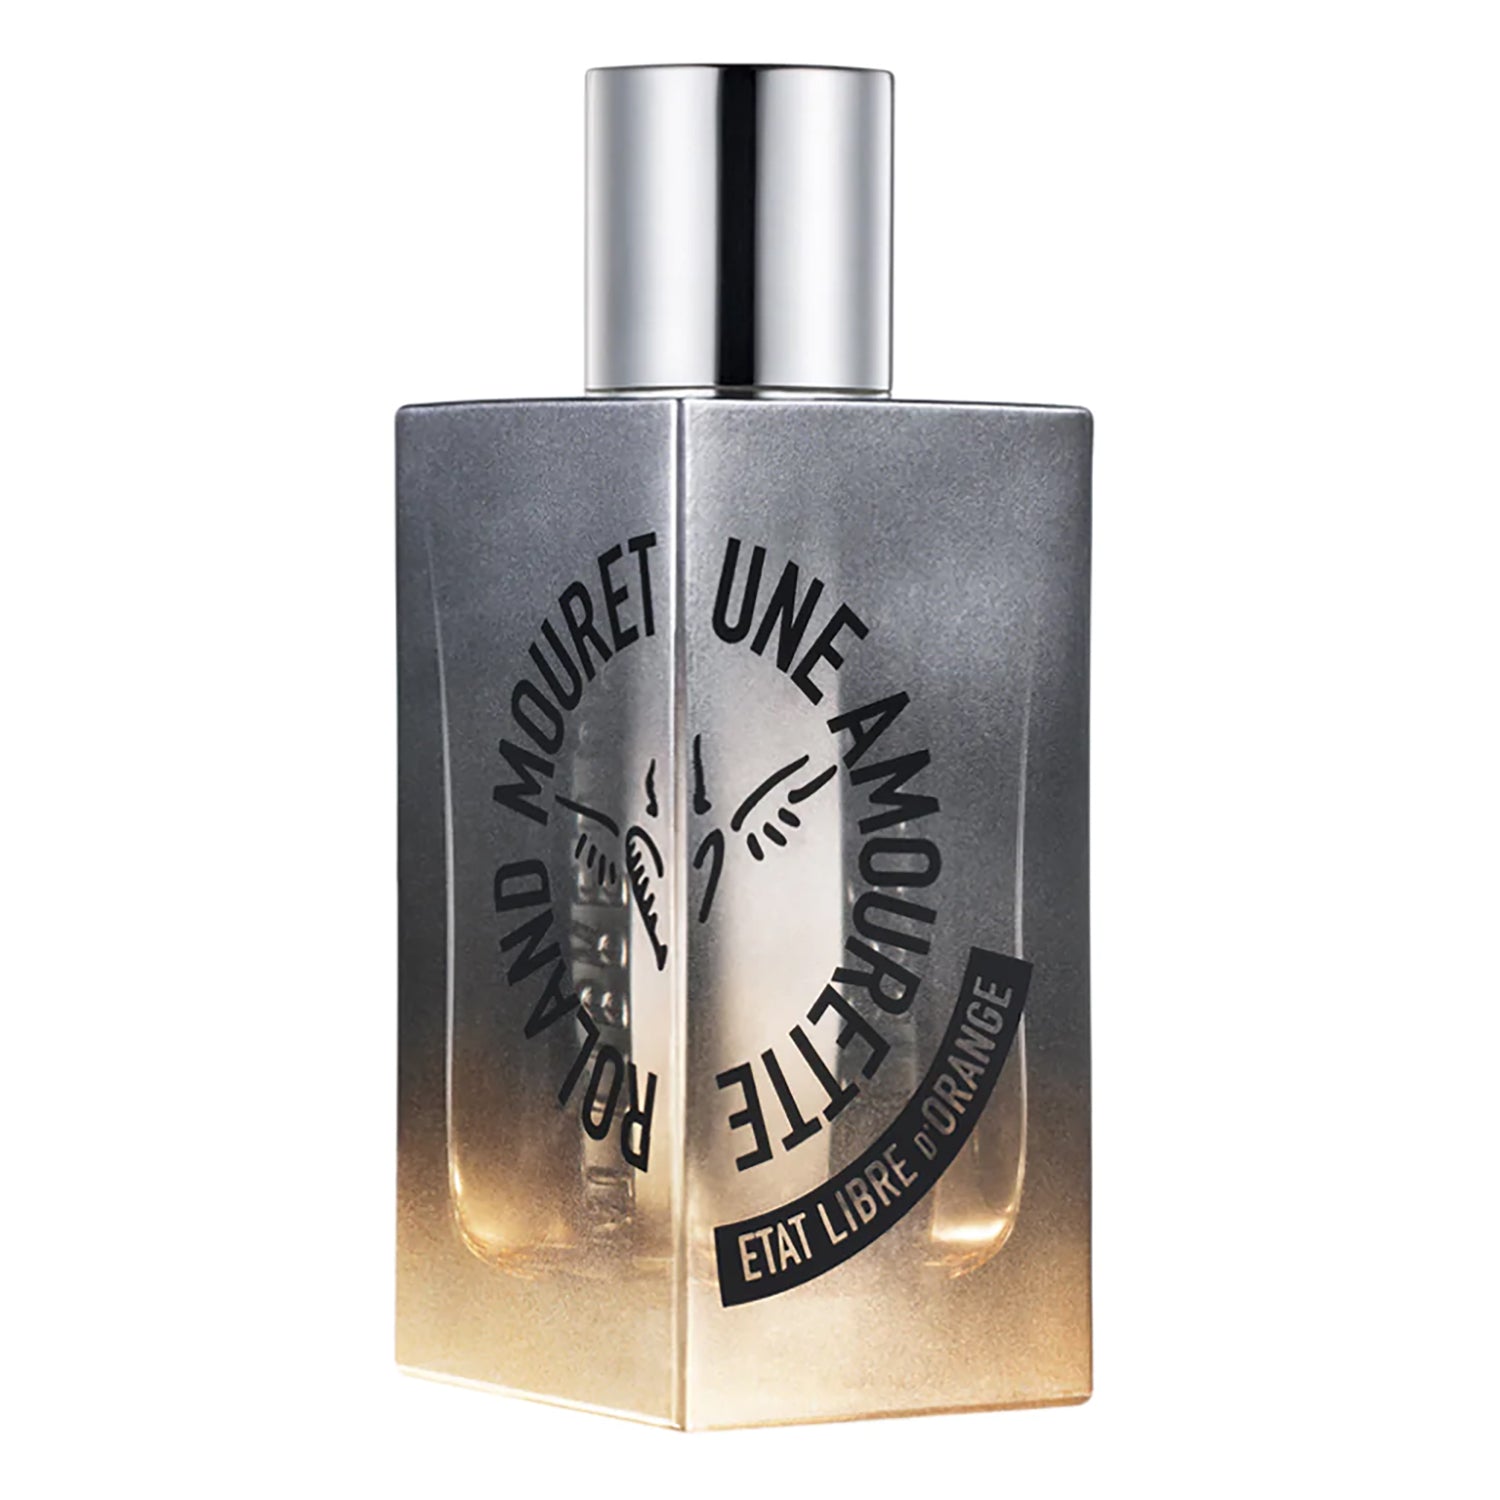 Libre Intense by Yves Saint Laurent Fragrance Samples, DecantX